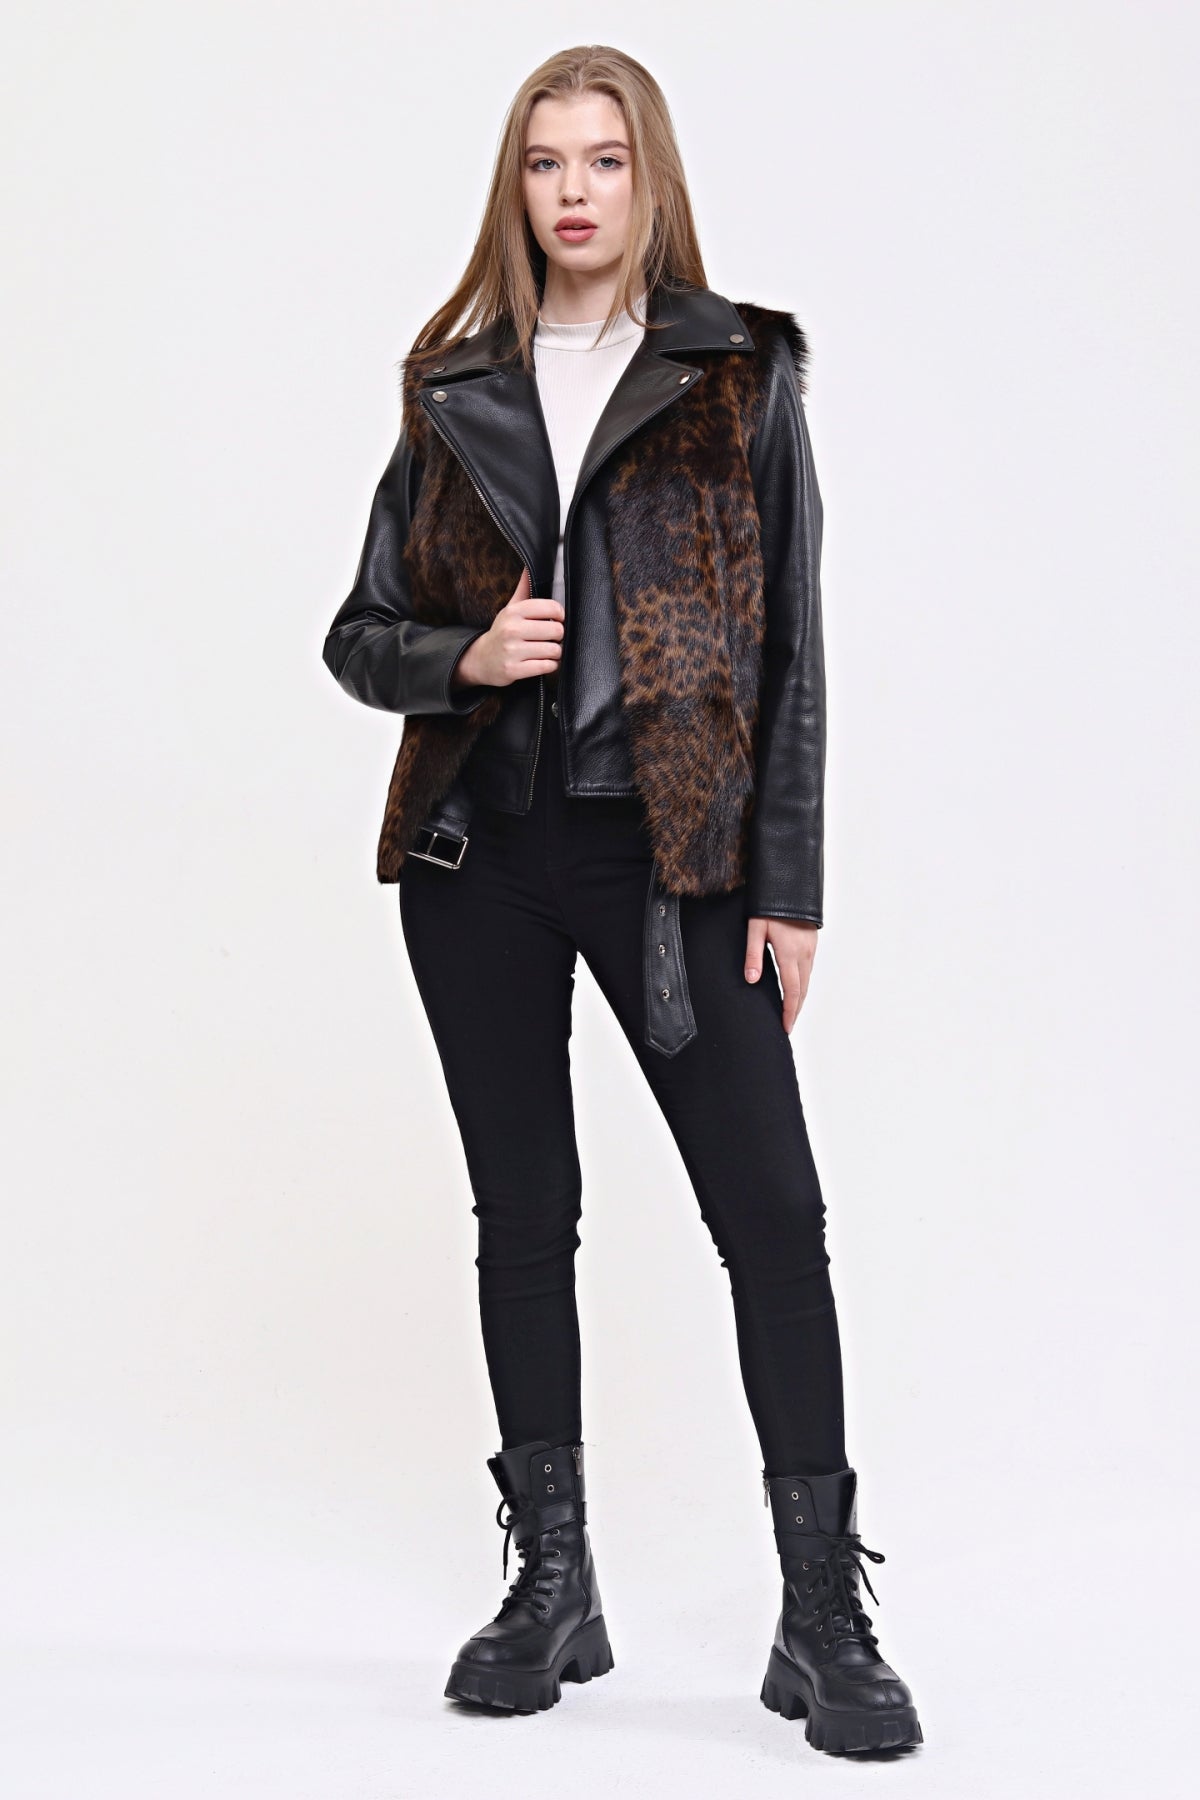 Leopard Patterned Women's Leather Vest